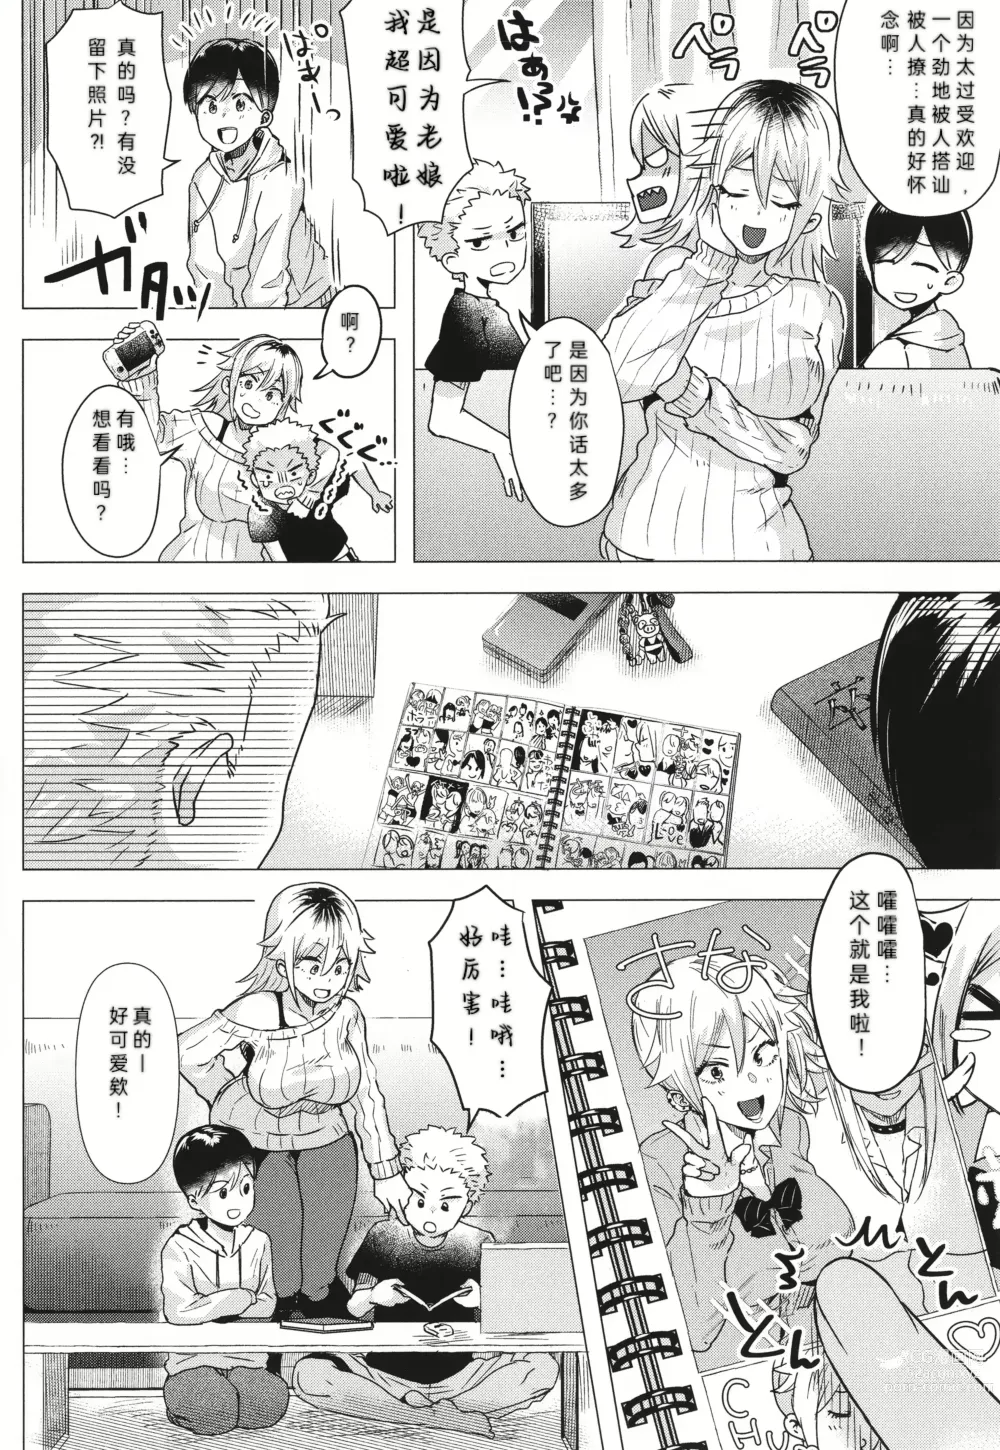 Page 2 of manga 被突然袭击的辣妹母亲